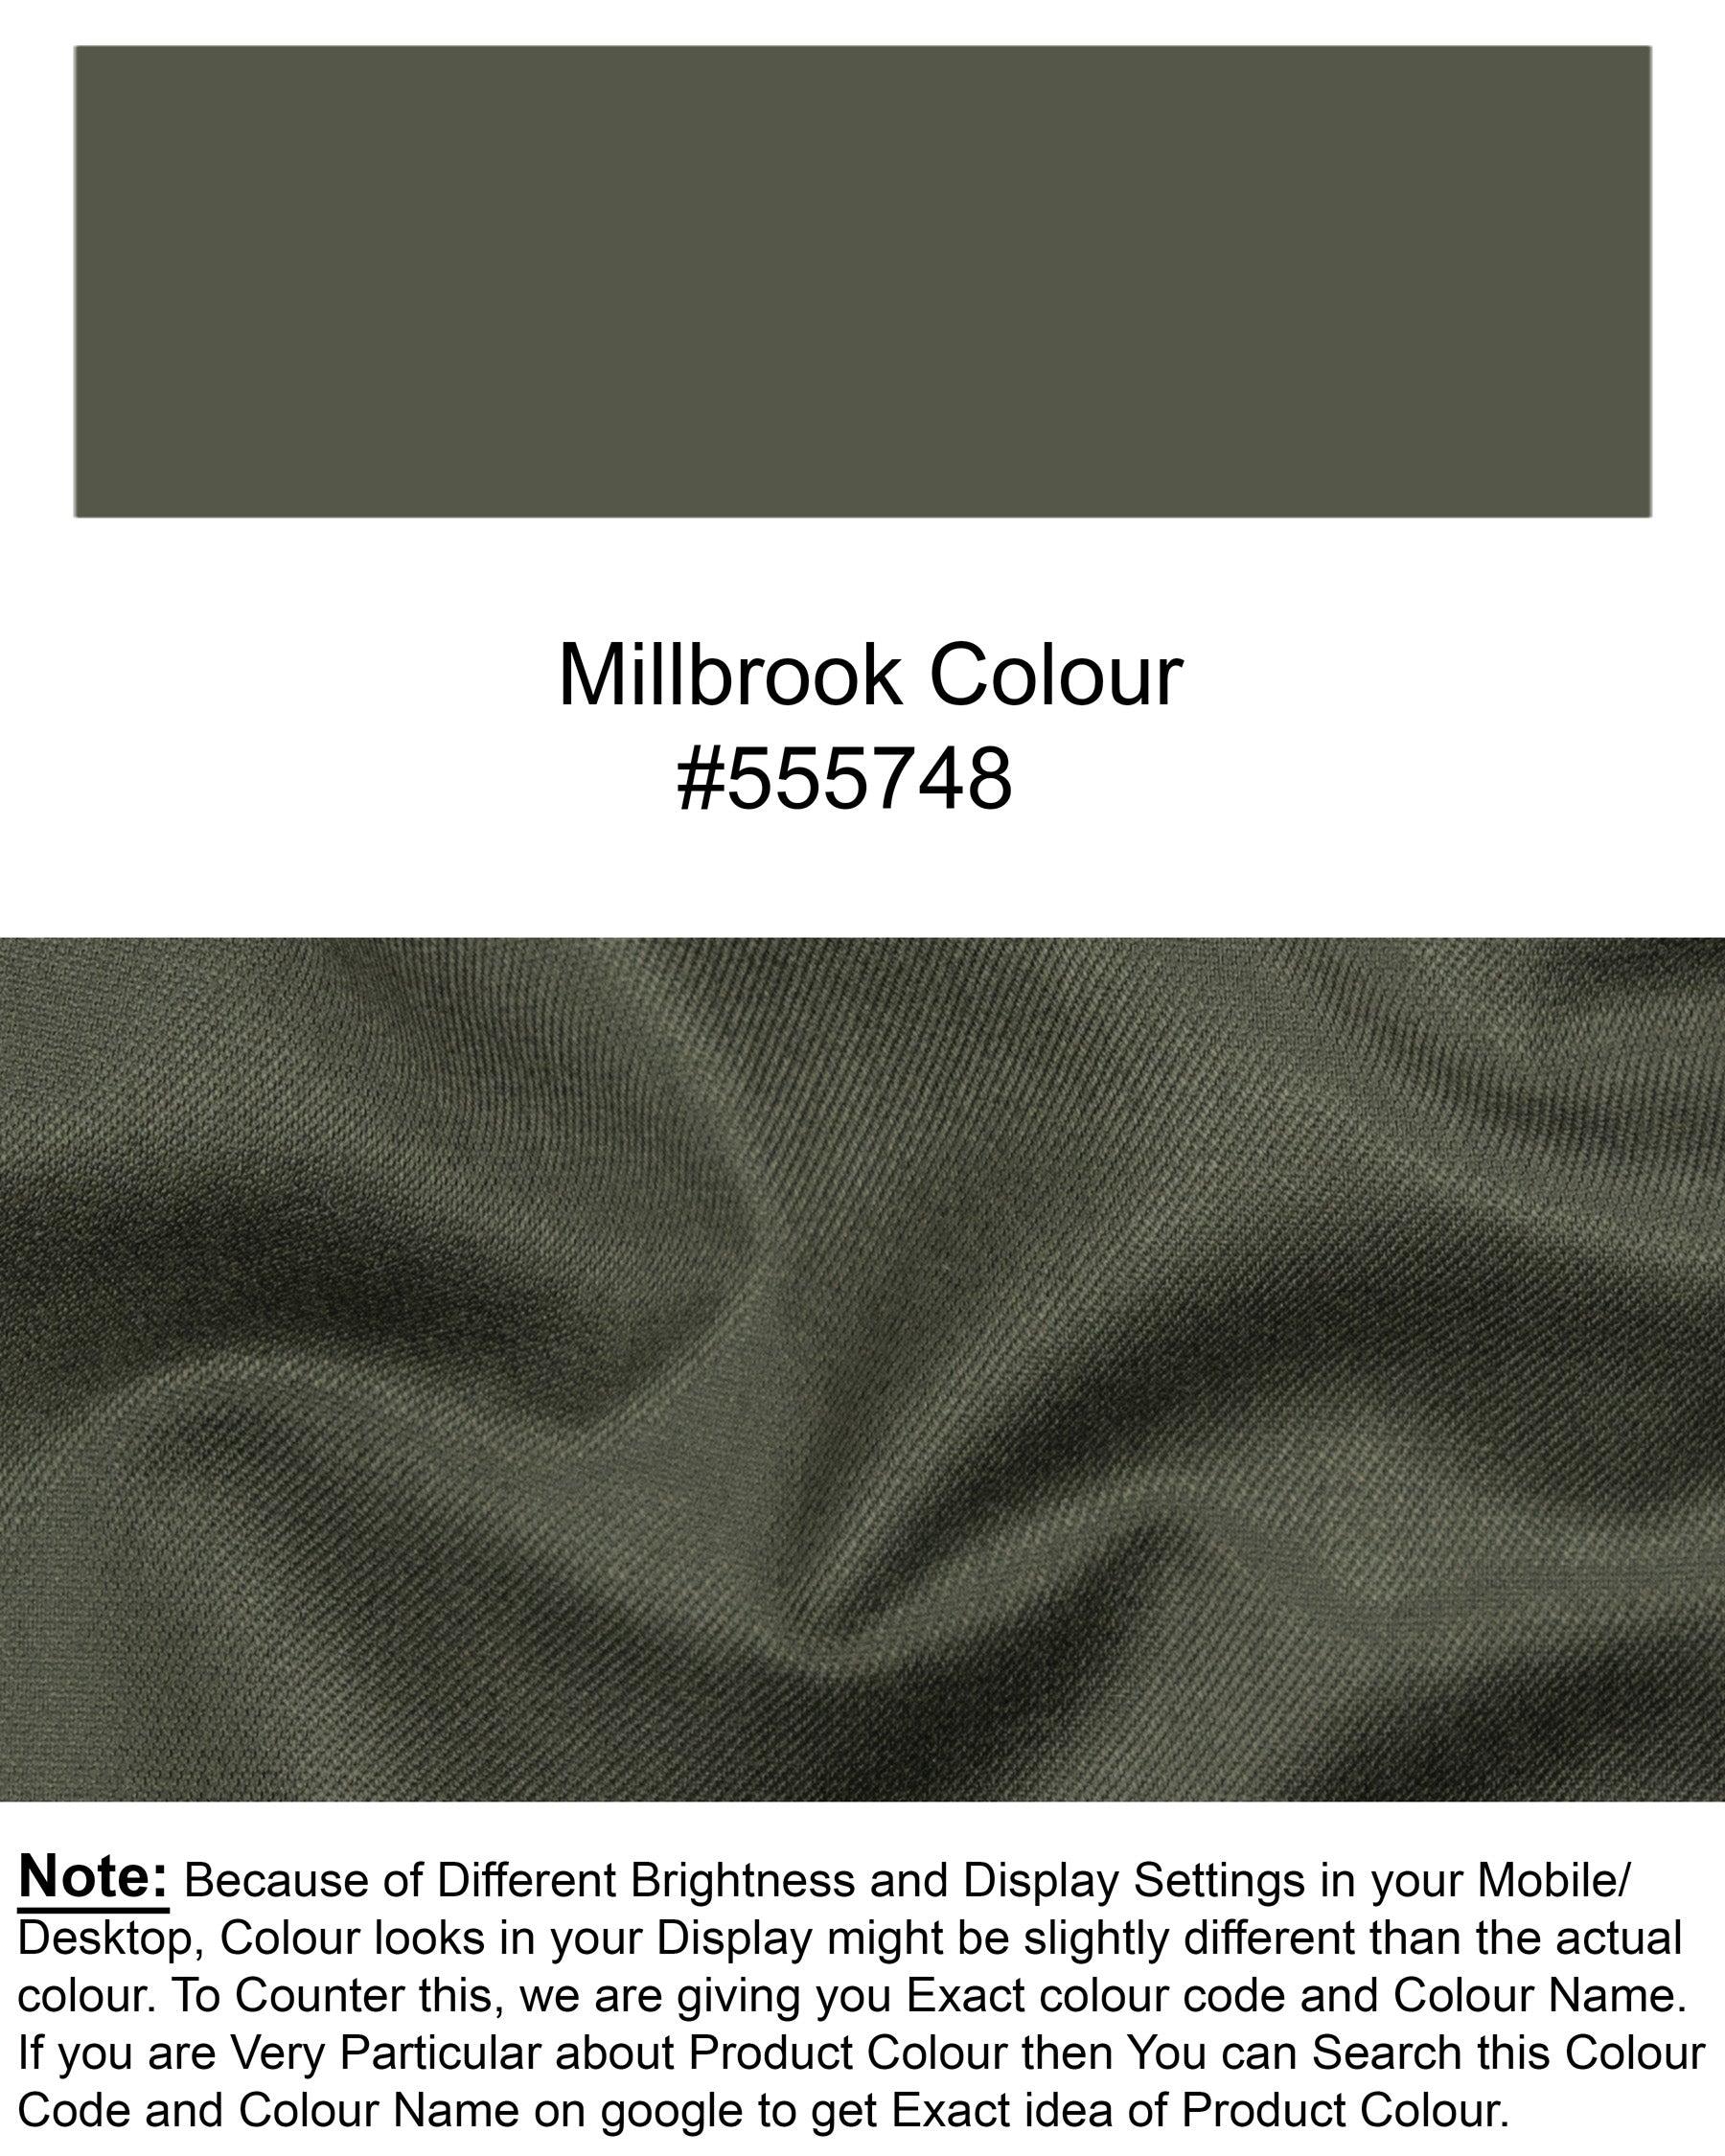 Millbrook Green Cross Buttoned Bandhgala/Mandarin Premium Cotton Blazer BL1297-CBG-36, BL1297-CBG-38, BL1297-CBG-40, BL1297-CBG-42, BL1297-CBG-44, BL1297-CBG-46, BL1297-CBG-48, BL1297-CBG-50, BL1297-CBG-52, BL1297-CBG-54, BL1297-CBG-56, BL1297-CBG-58, BL1297-CBG-60